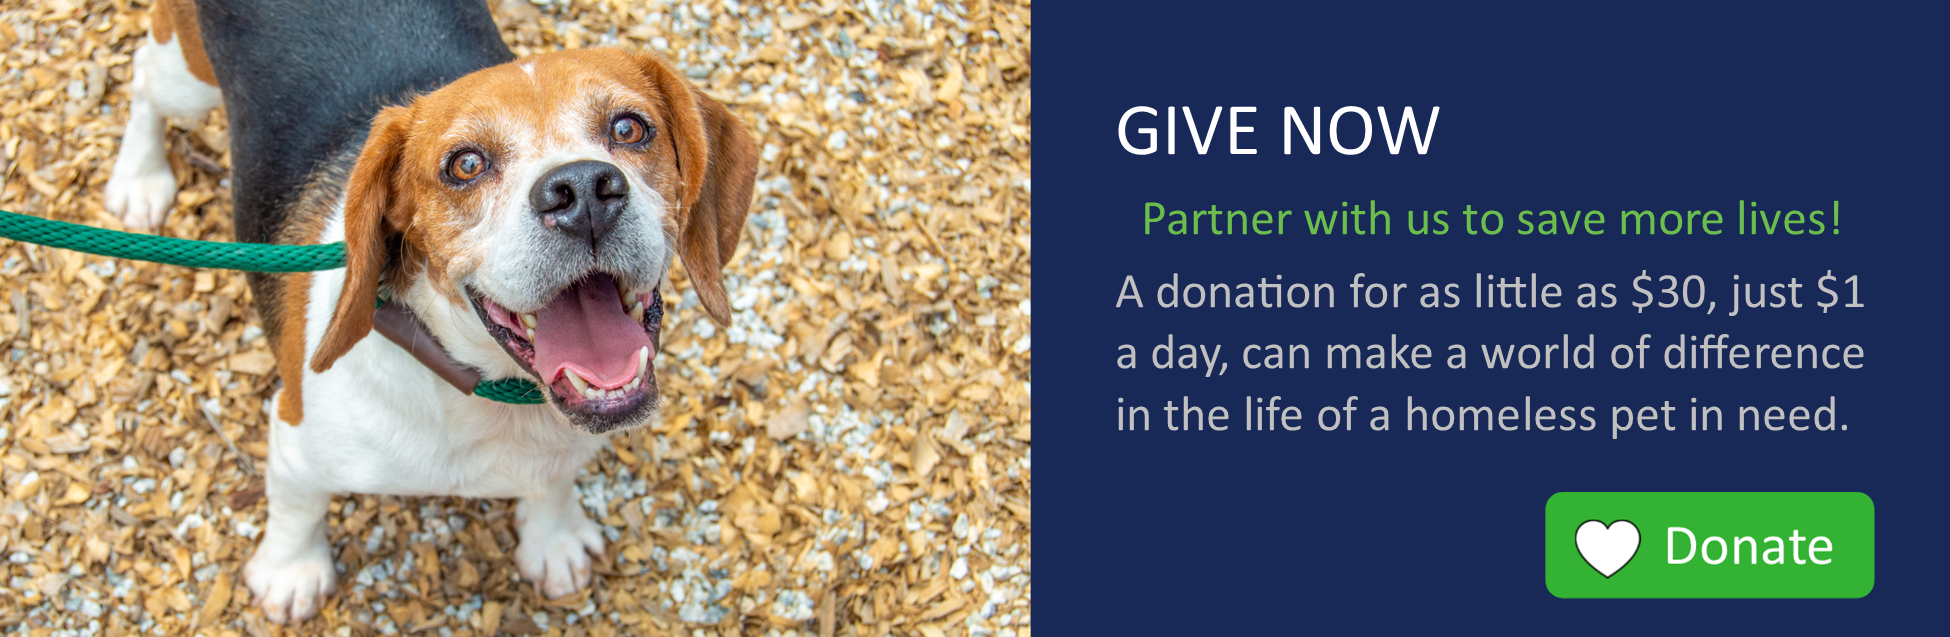 dog donation website